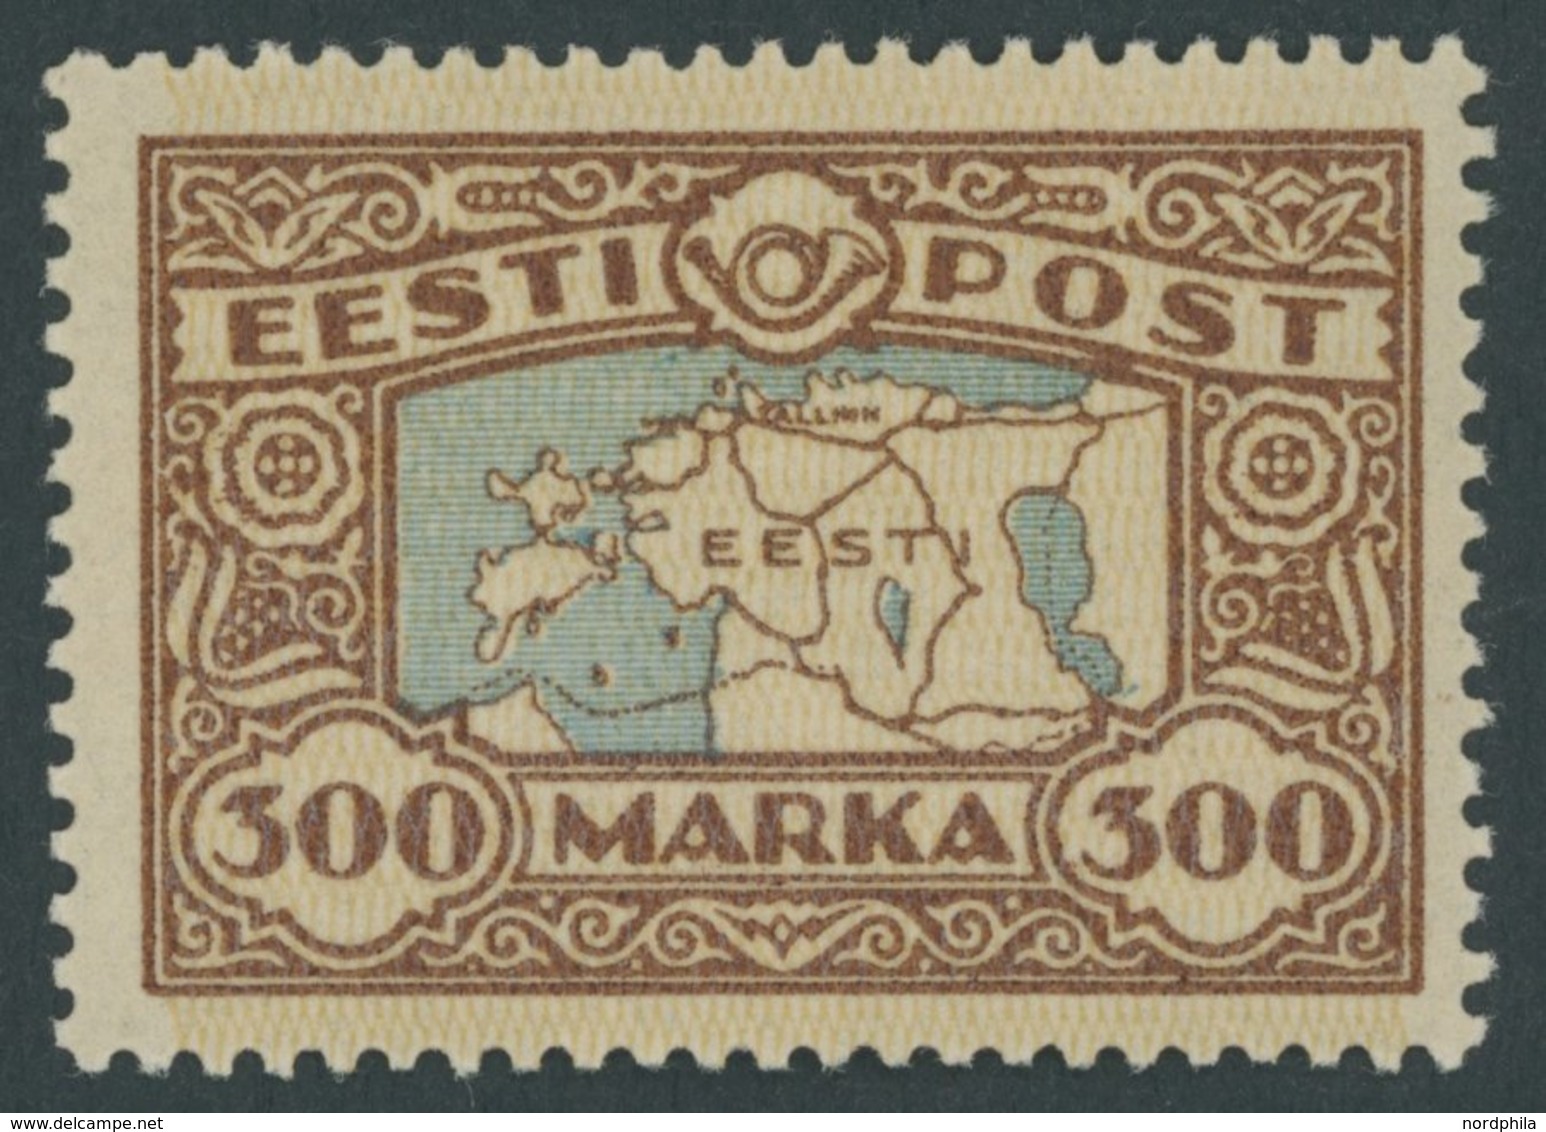 ESTLAND 54 *, 1924, 300 M. Landkarte, Falzrest, Pracht - Estland